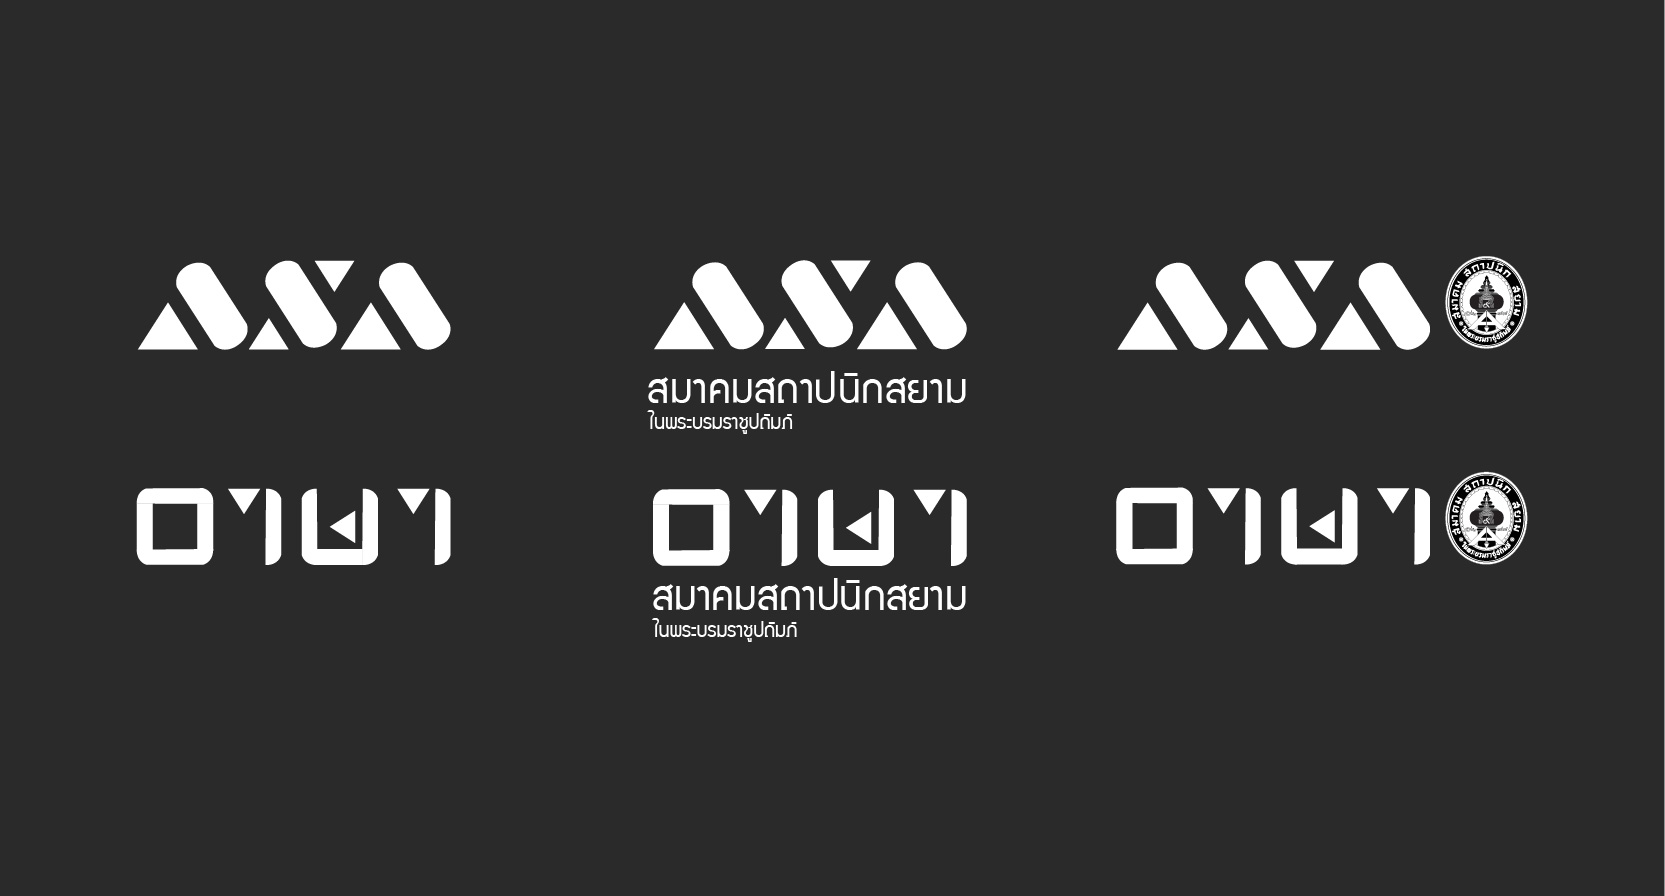 logo variations in black background